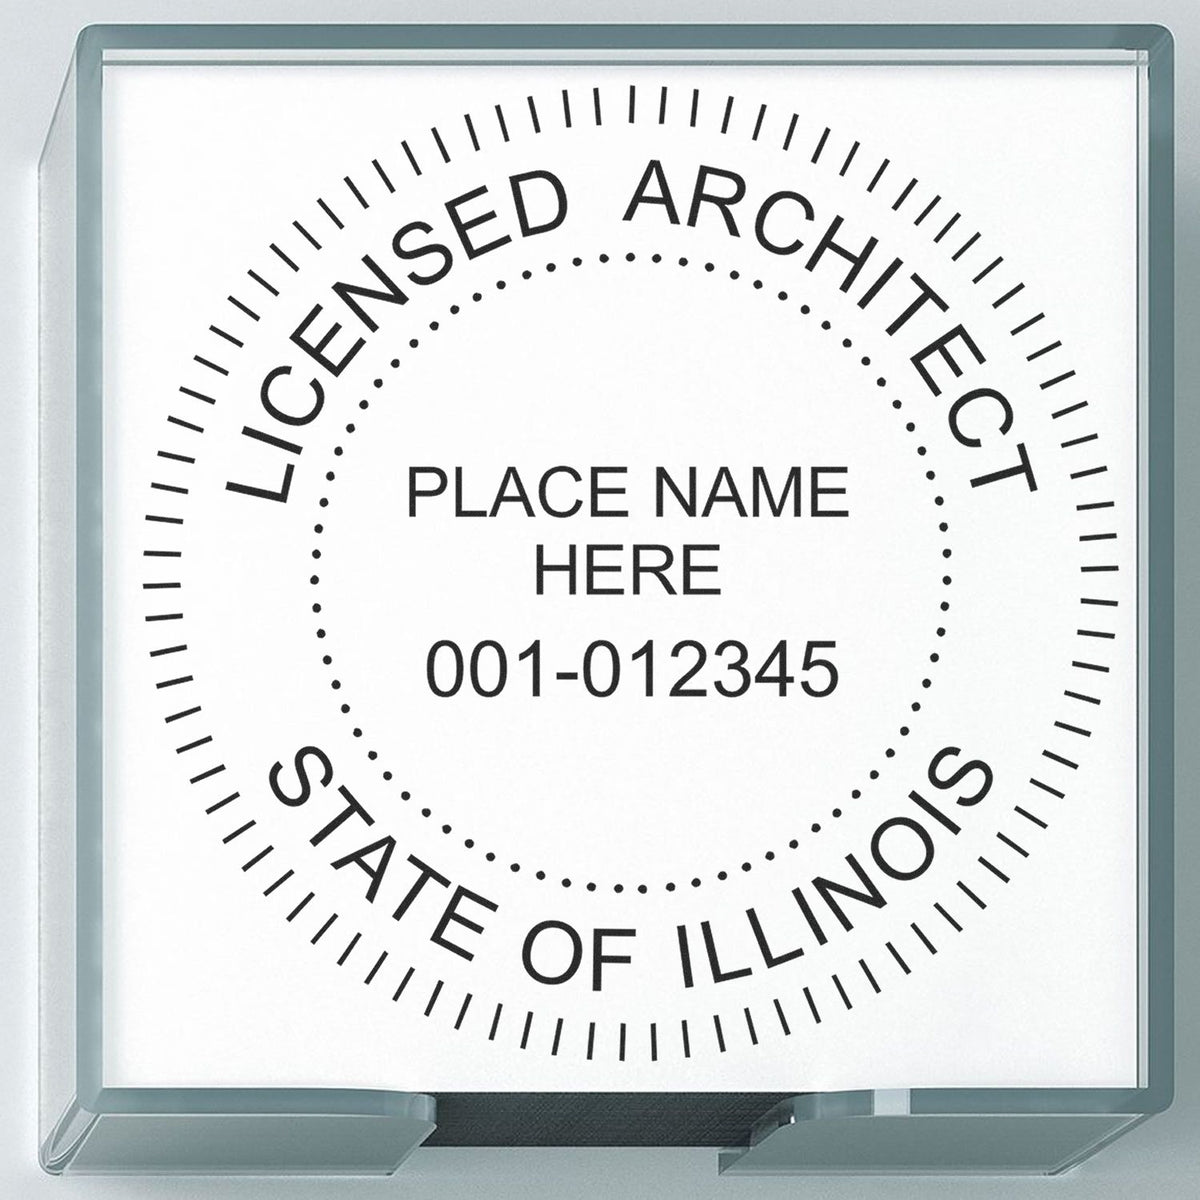 Illinois Architect Seal Stamp Lifestyle Photo